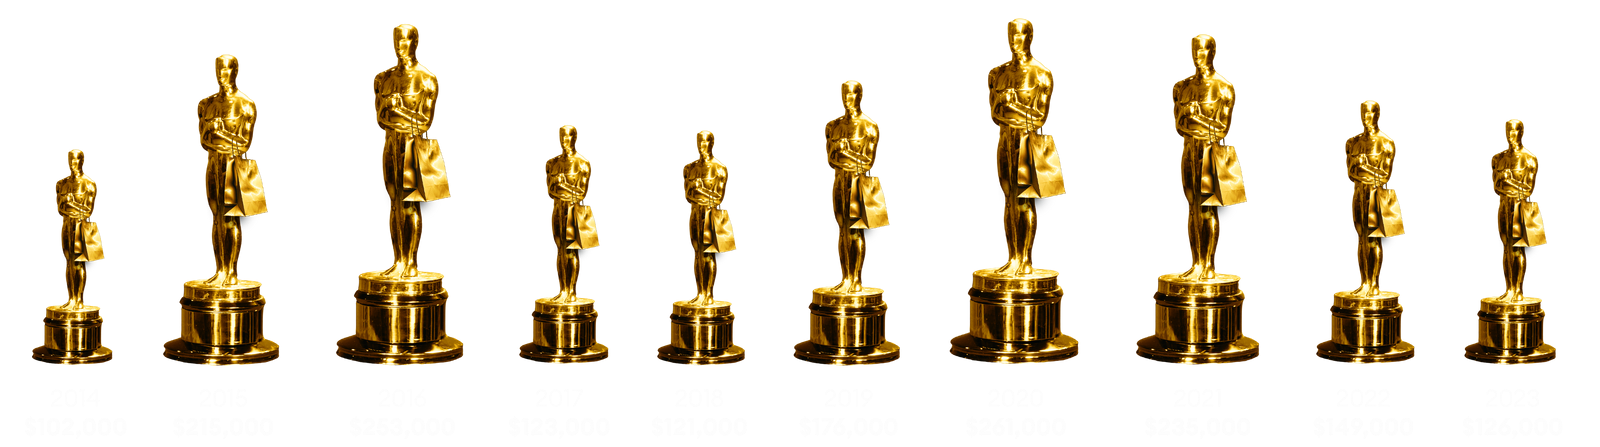 Oscars gift bag value